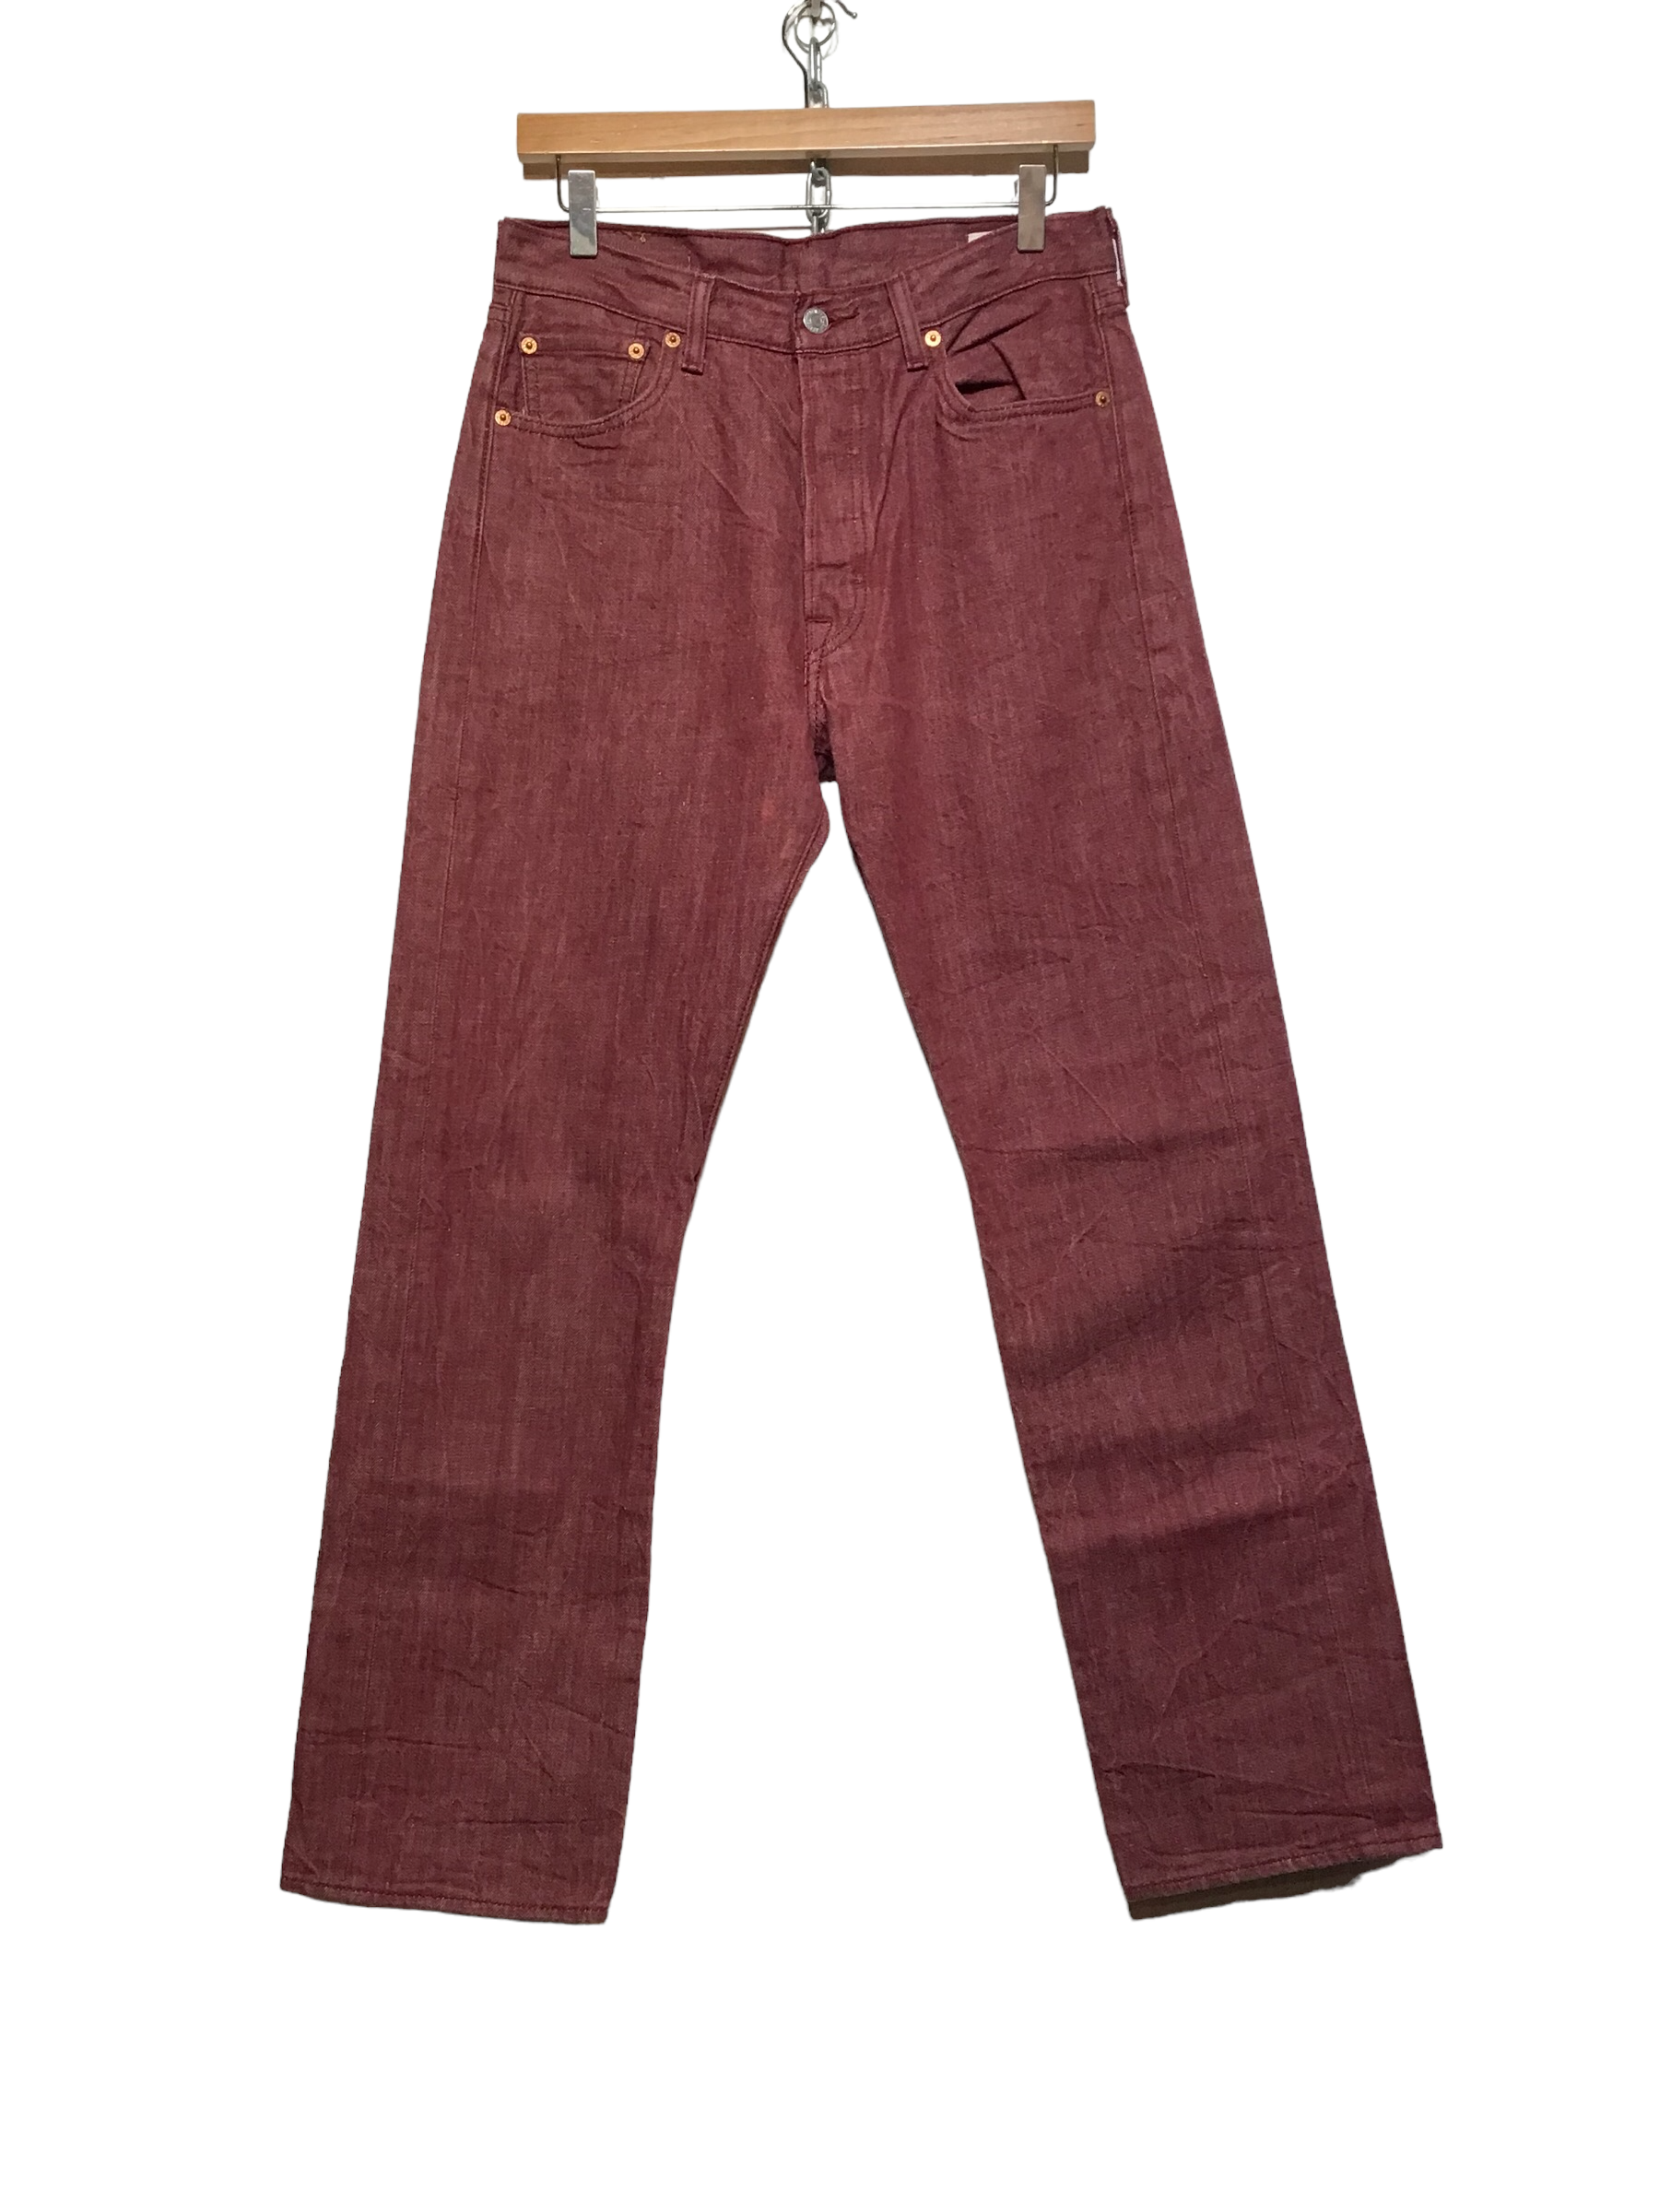 Levi Burgundy Jeans (31X30) – Loft 68 Vintage